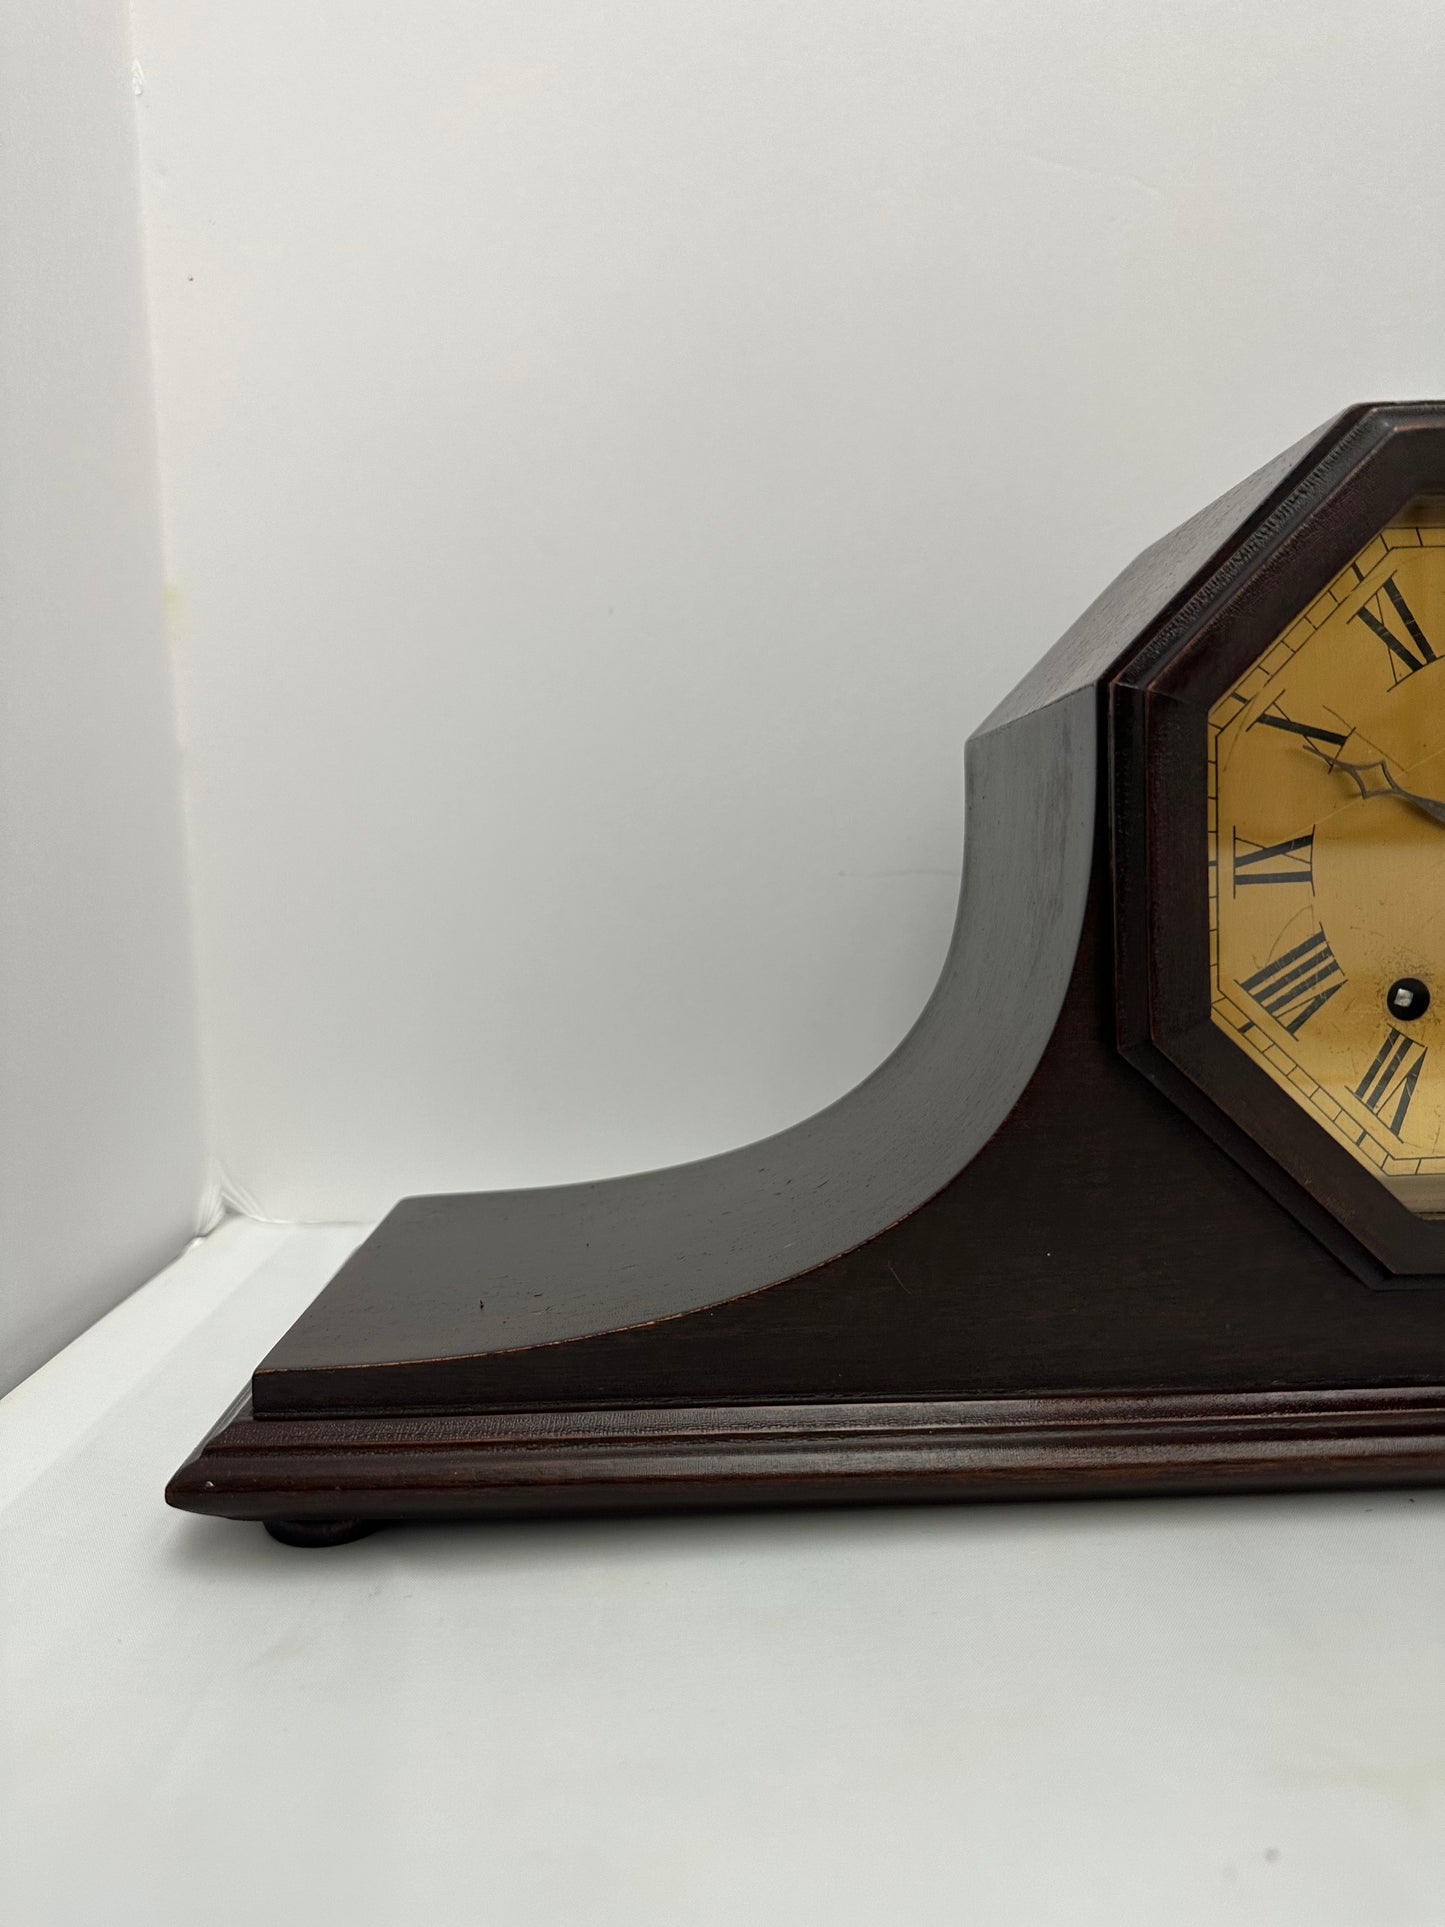 Antique - Seth Thomas Mantel Clock